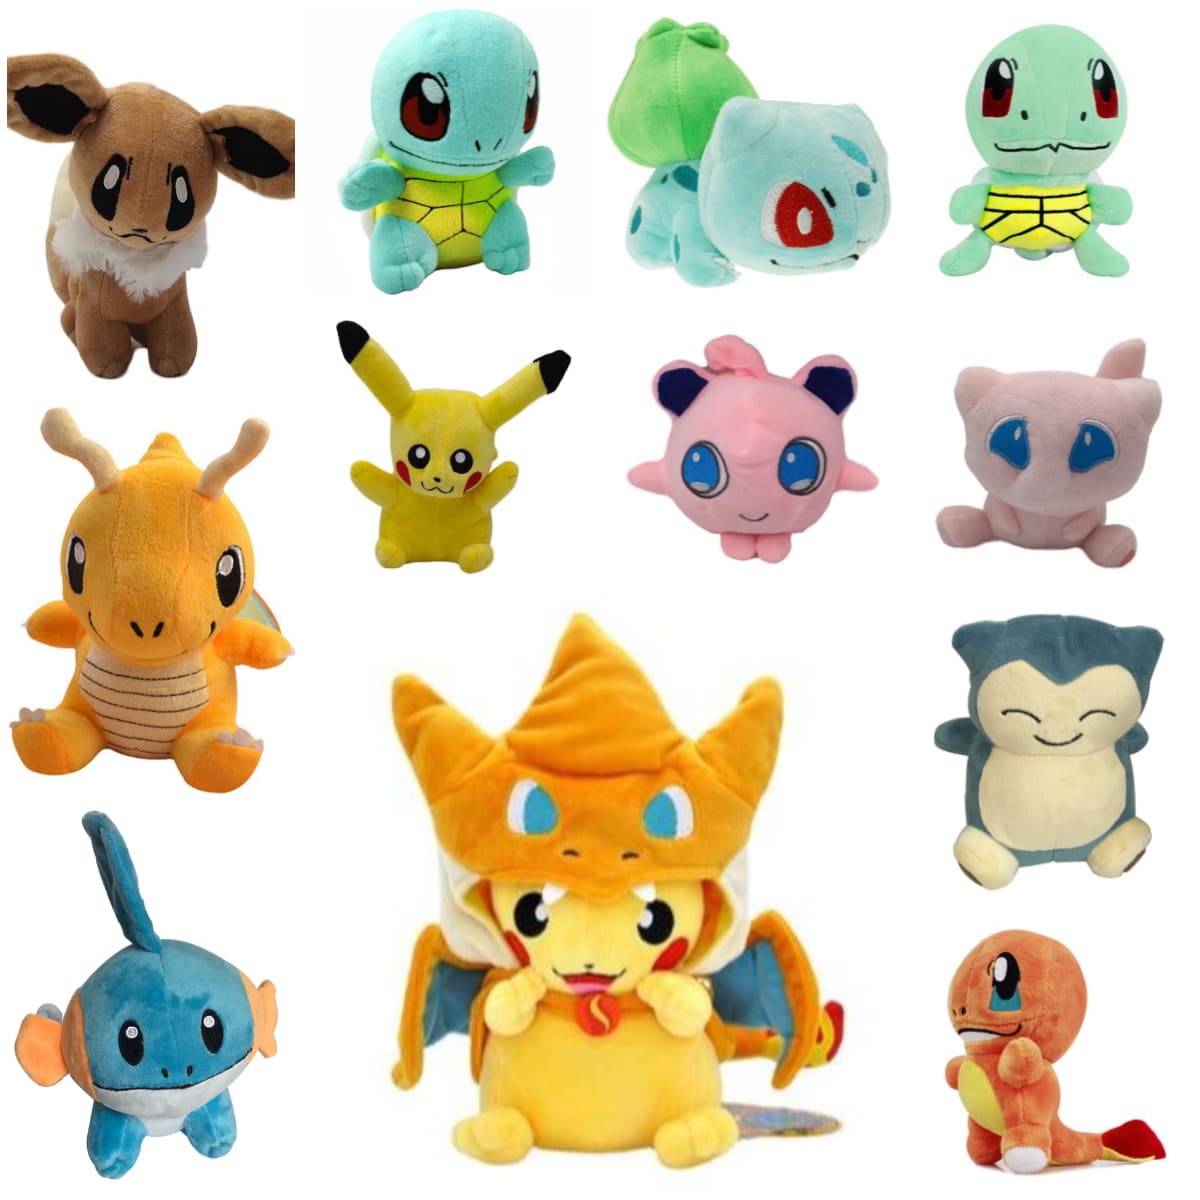 12 Styles Mixed Pokemon Plush Toy Set Ideal Gift for Kids